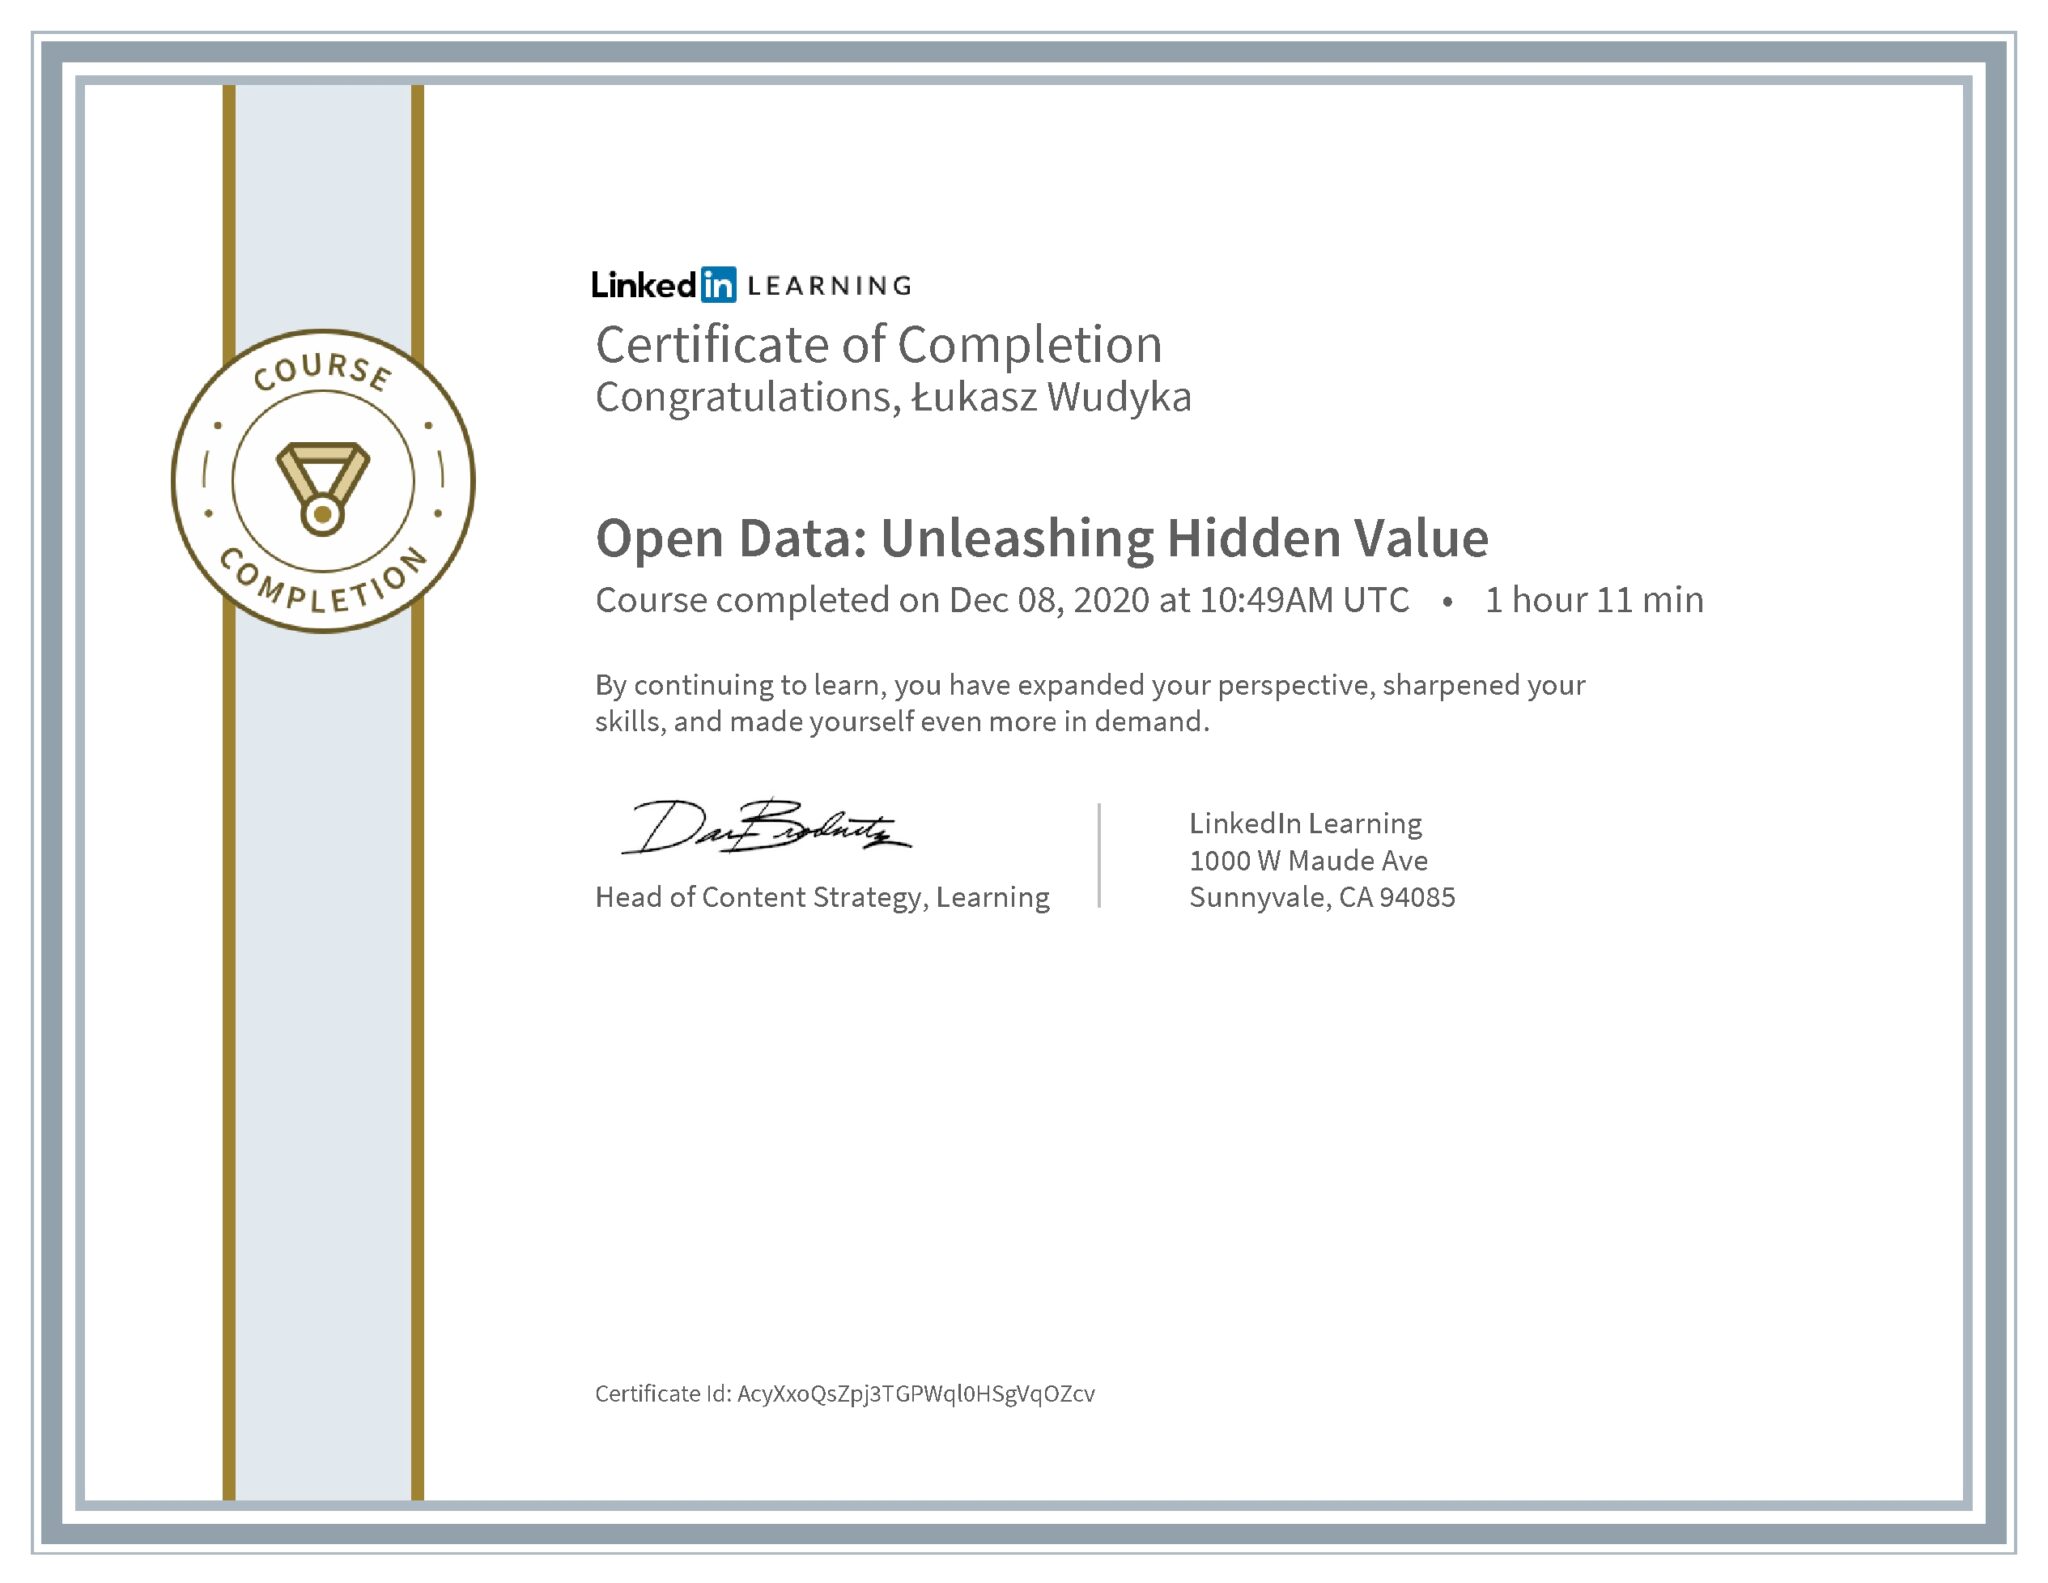 Łukasz Wudyka certyfikat LinkedIn Open Data: Unleashing Hidden Value